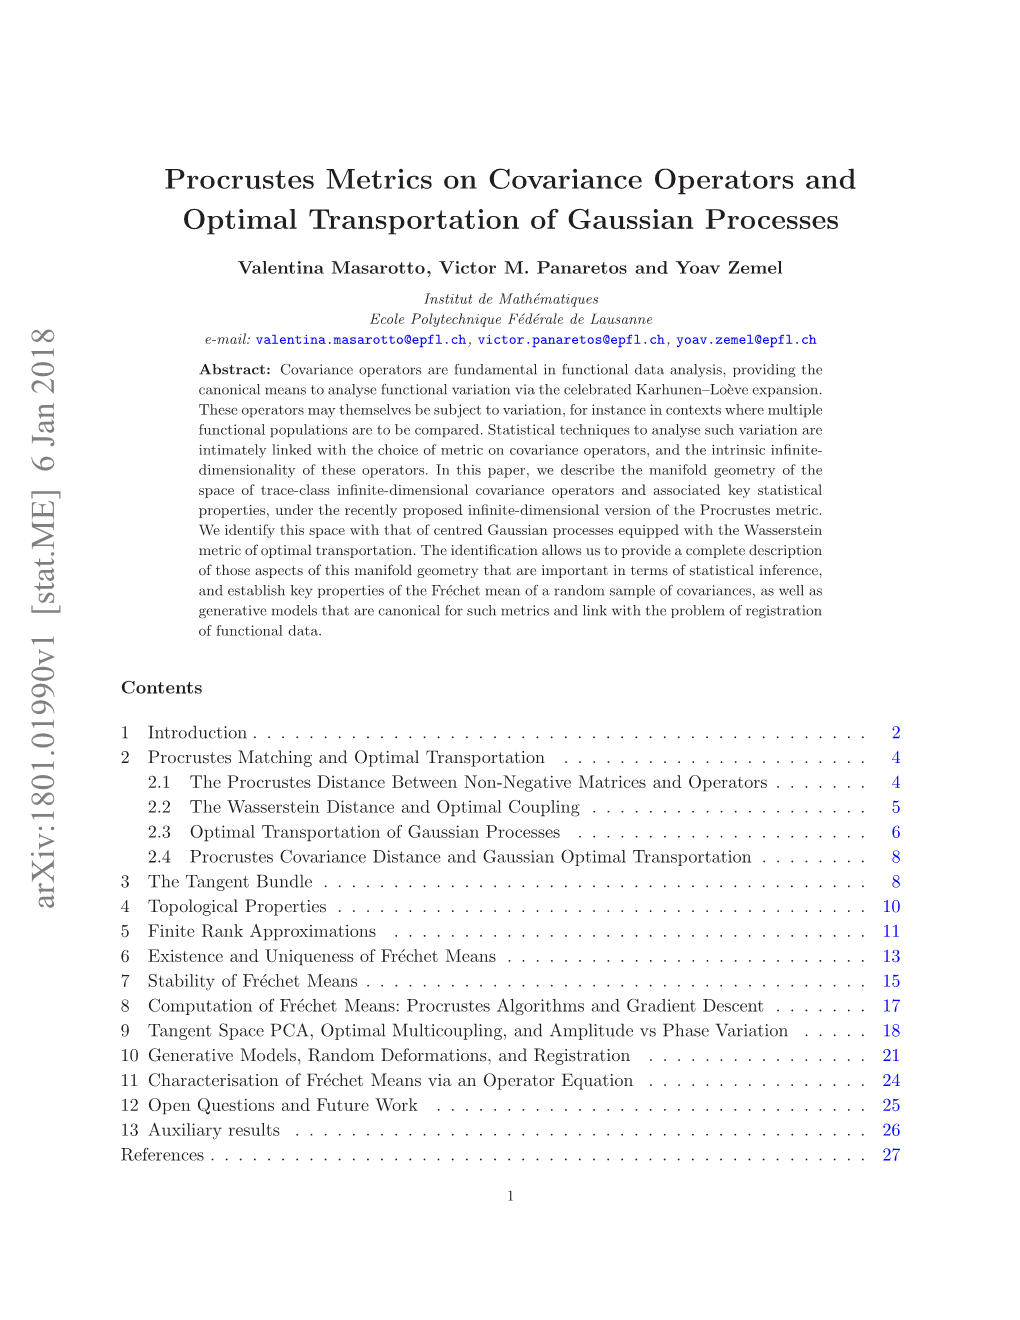 Procrustes Metrics on Covariance Operators and Optimal